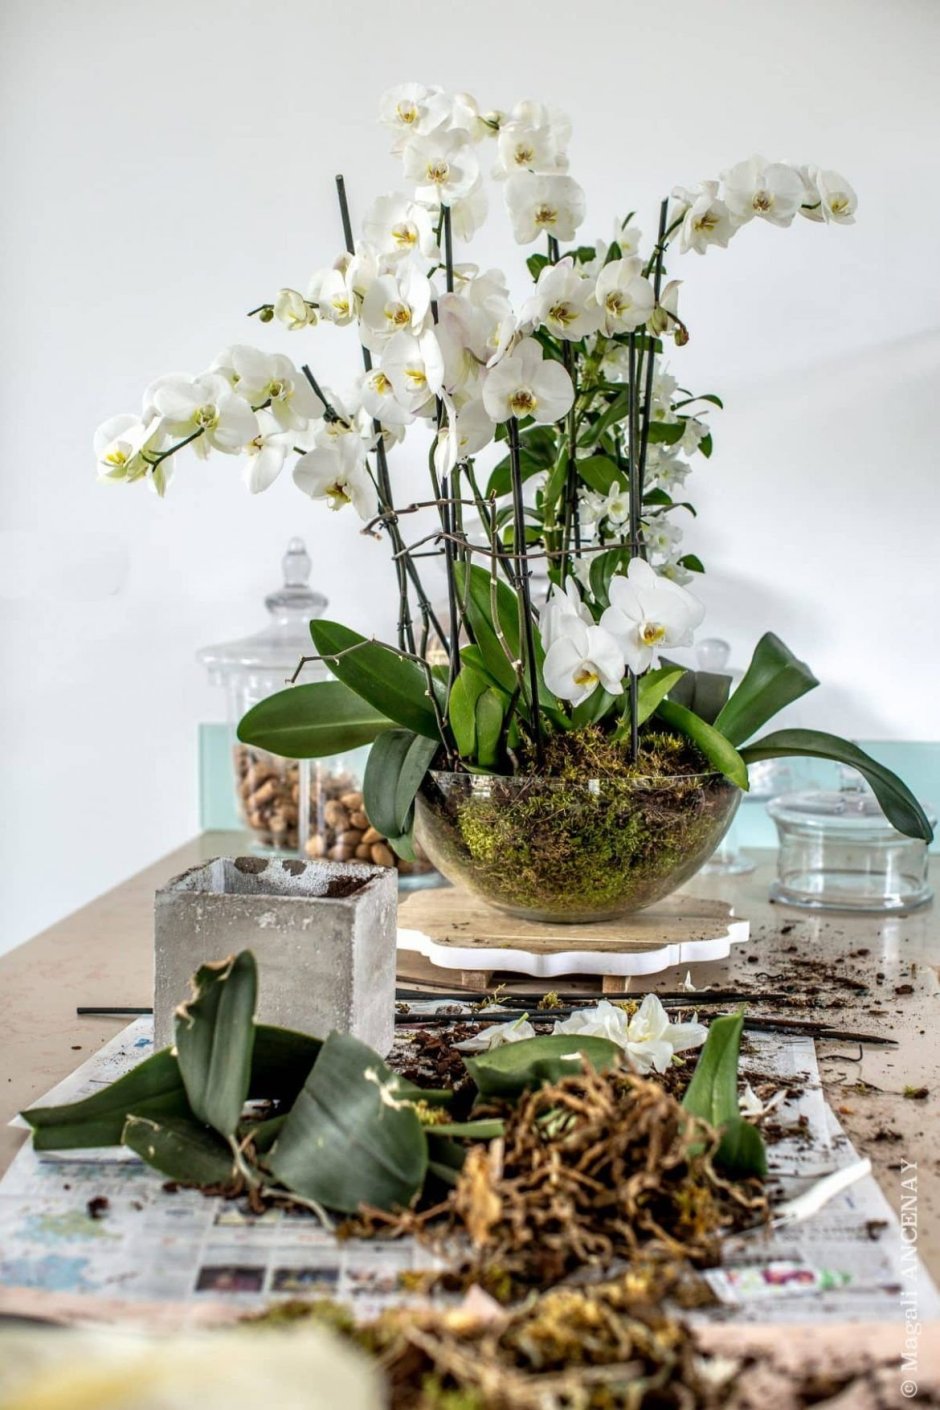 Композиции с орхидеей фаленопсис